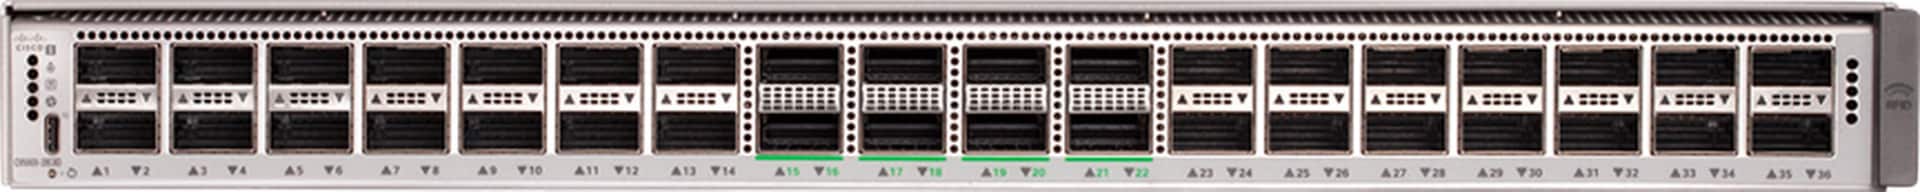 Cisco Catalyst C9500X-28C8D - Network Advantage - switch - 28 ports - managed - rack-mountable